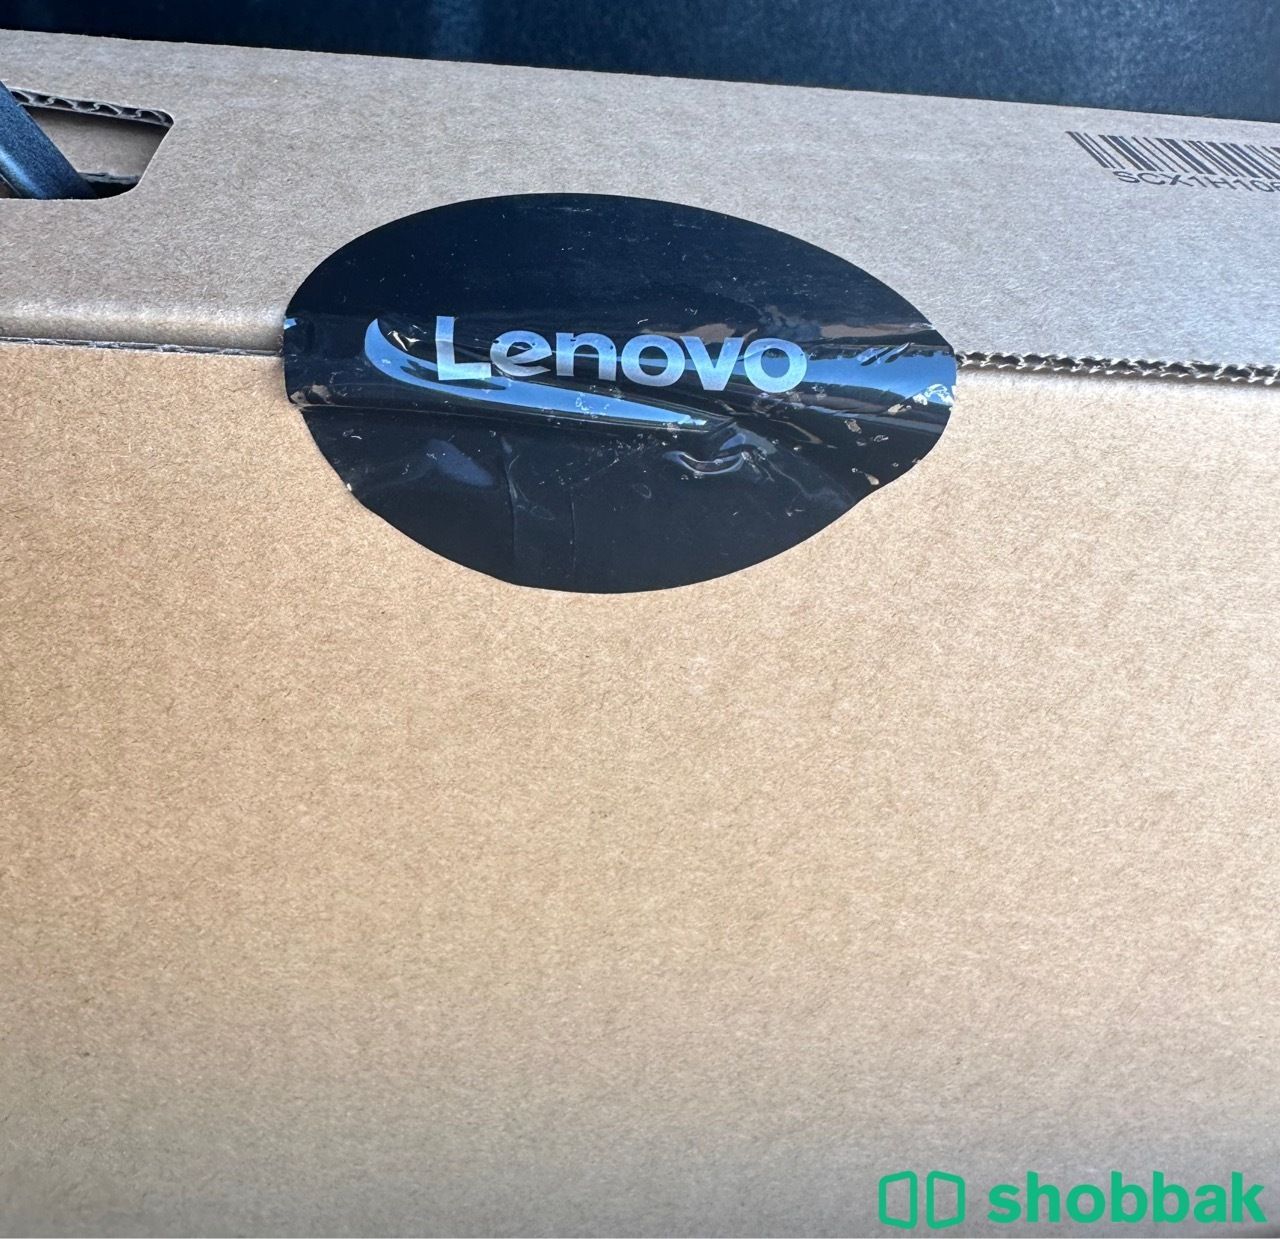 لابتوب لينوفو ايد باد 3 قيمنق / Lenovo Ideapad Gaming 3 Shobbak Saudi Arabia